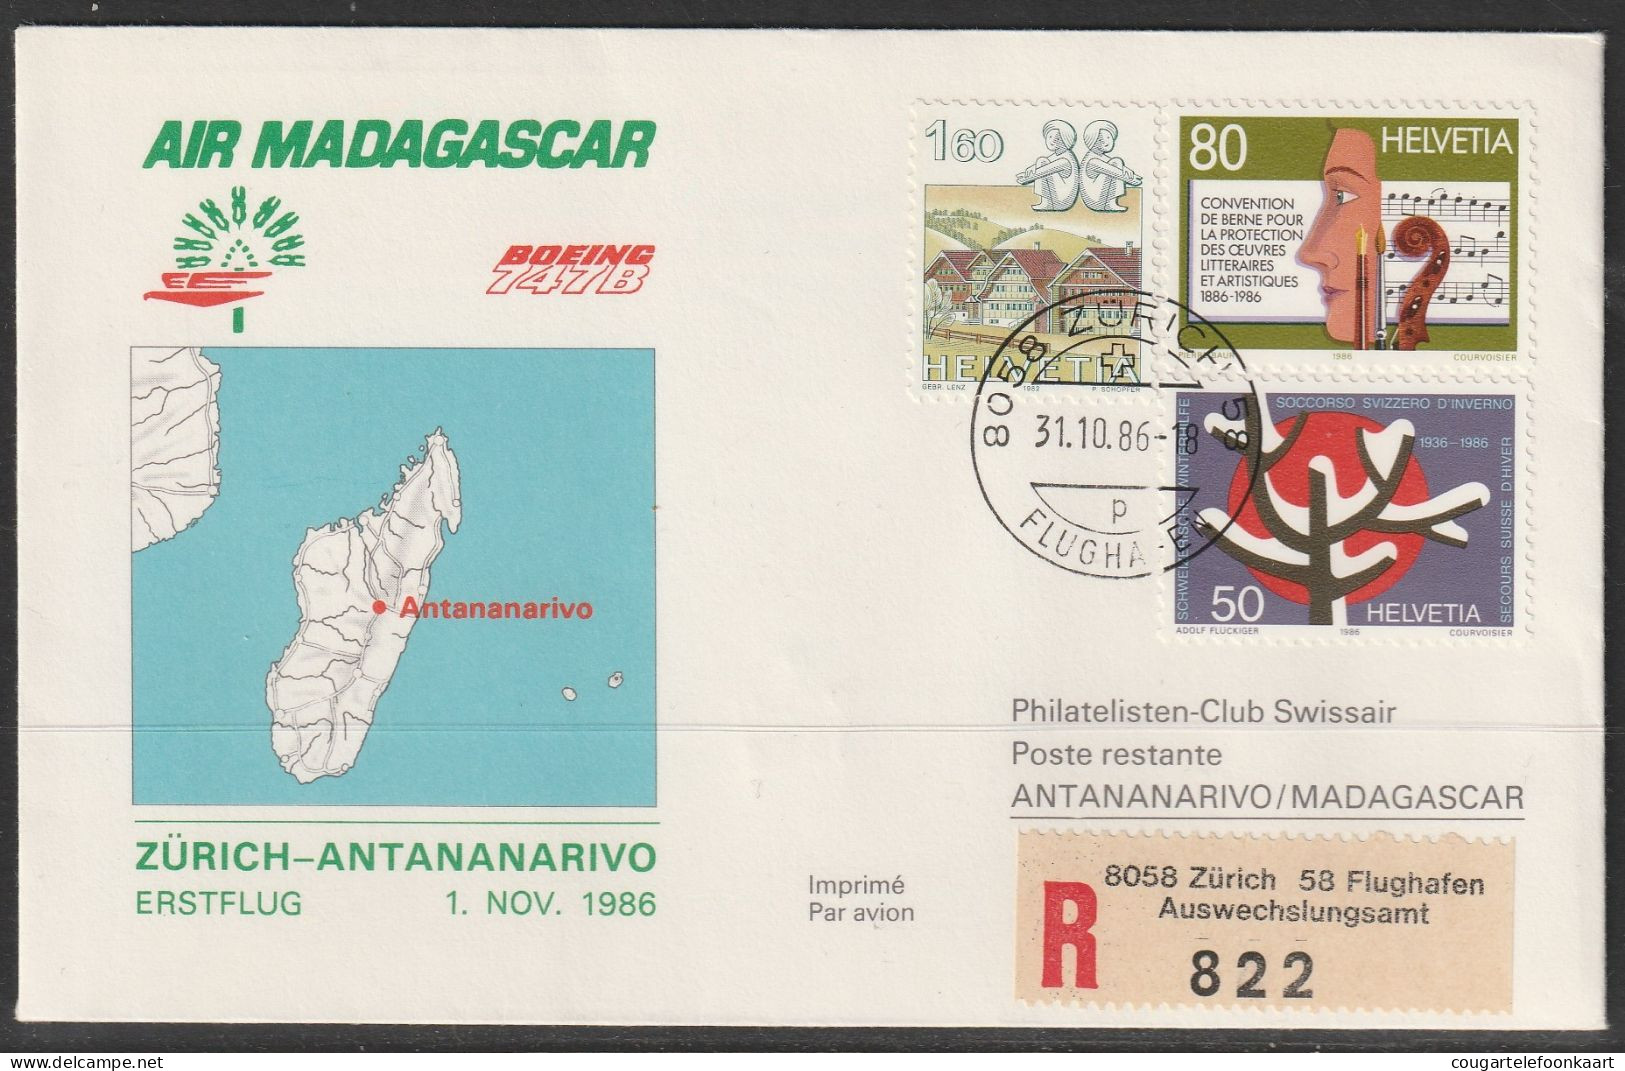 1986, Air Madagascar, Erstflug, Zürich - Antananarivo - First Flight Covers